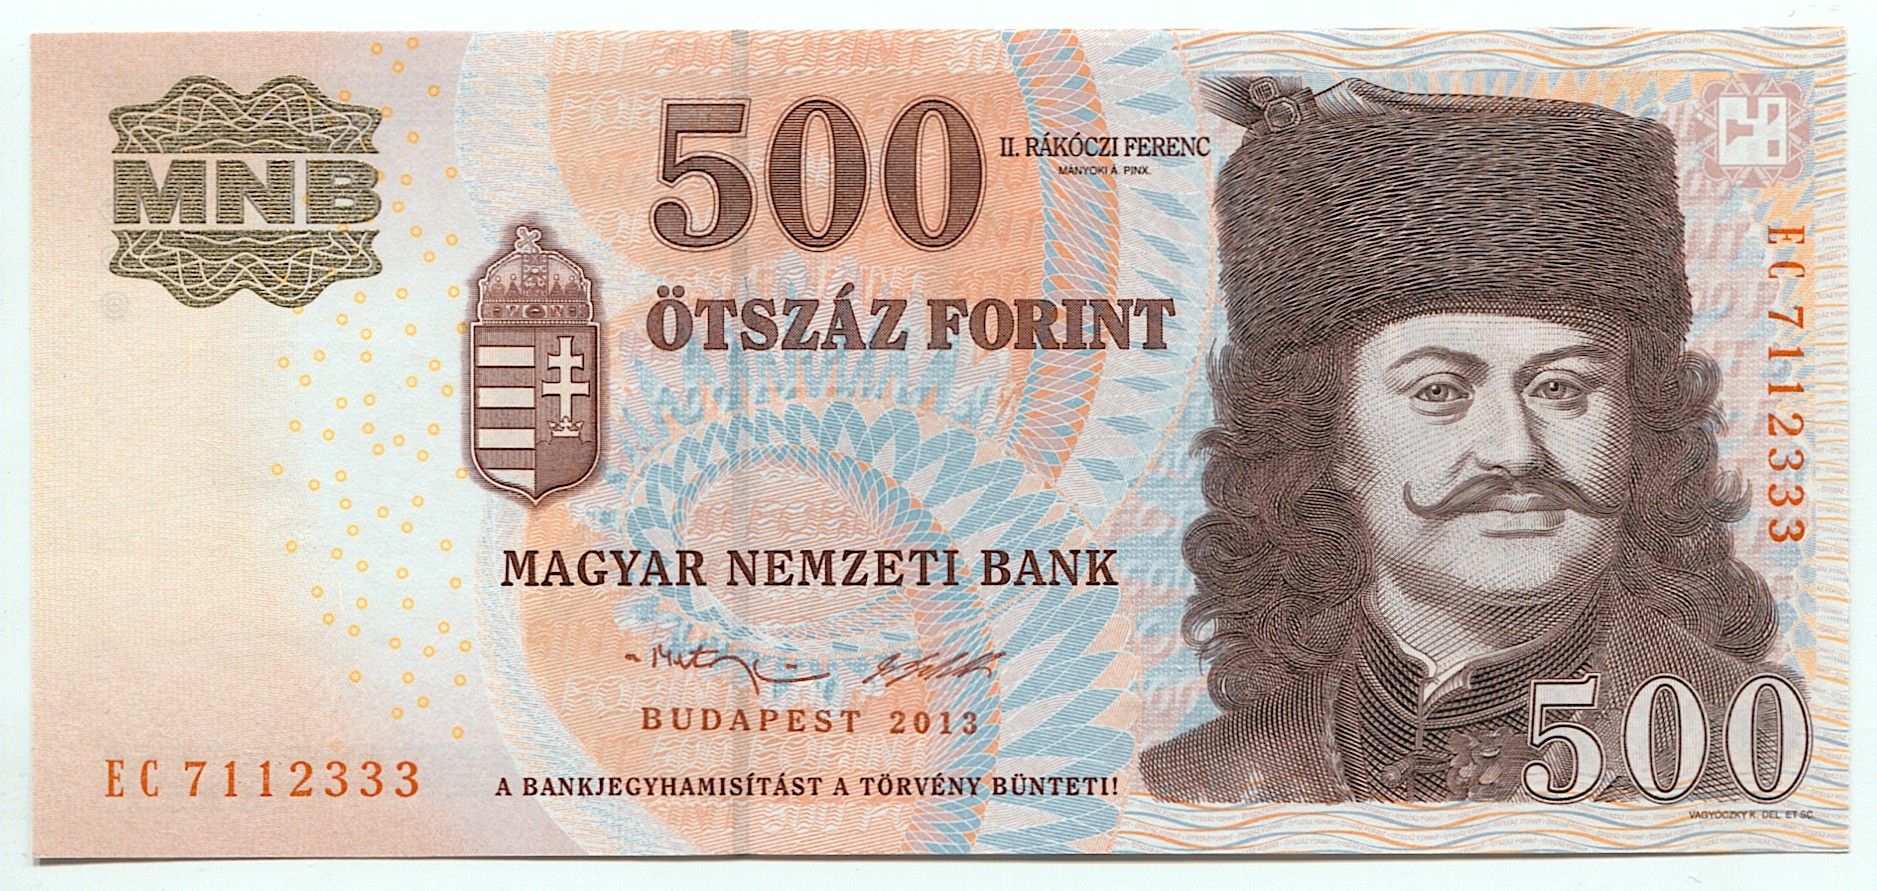 Hungary 500 Forint p-196e 2013 UNC Banknote